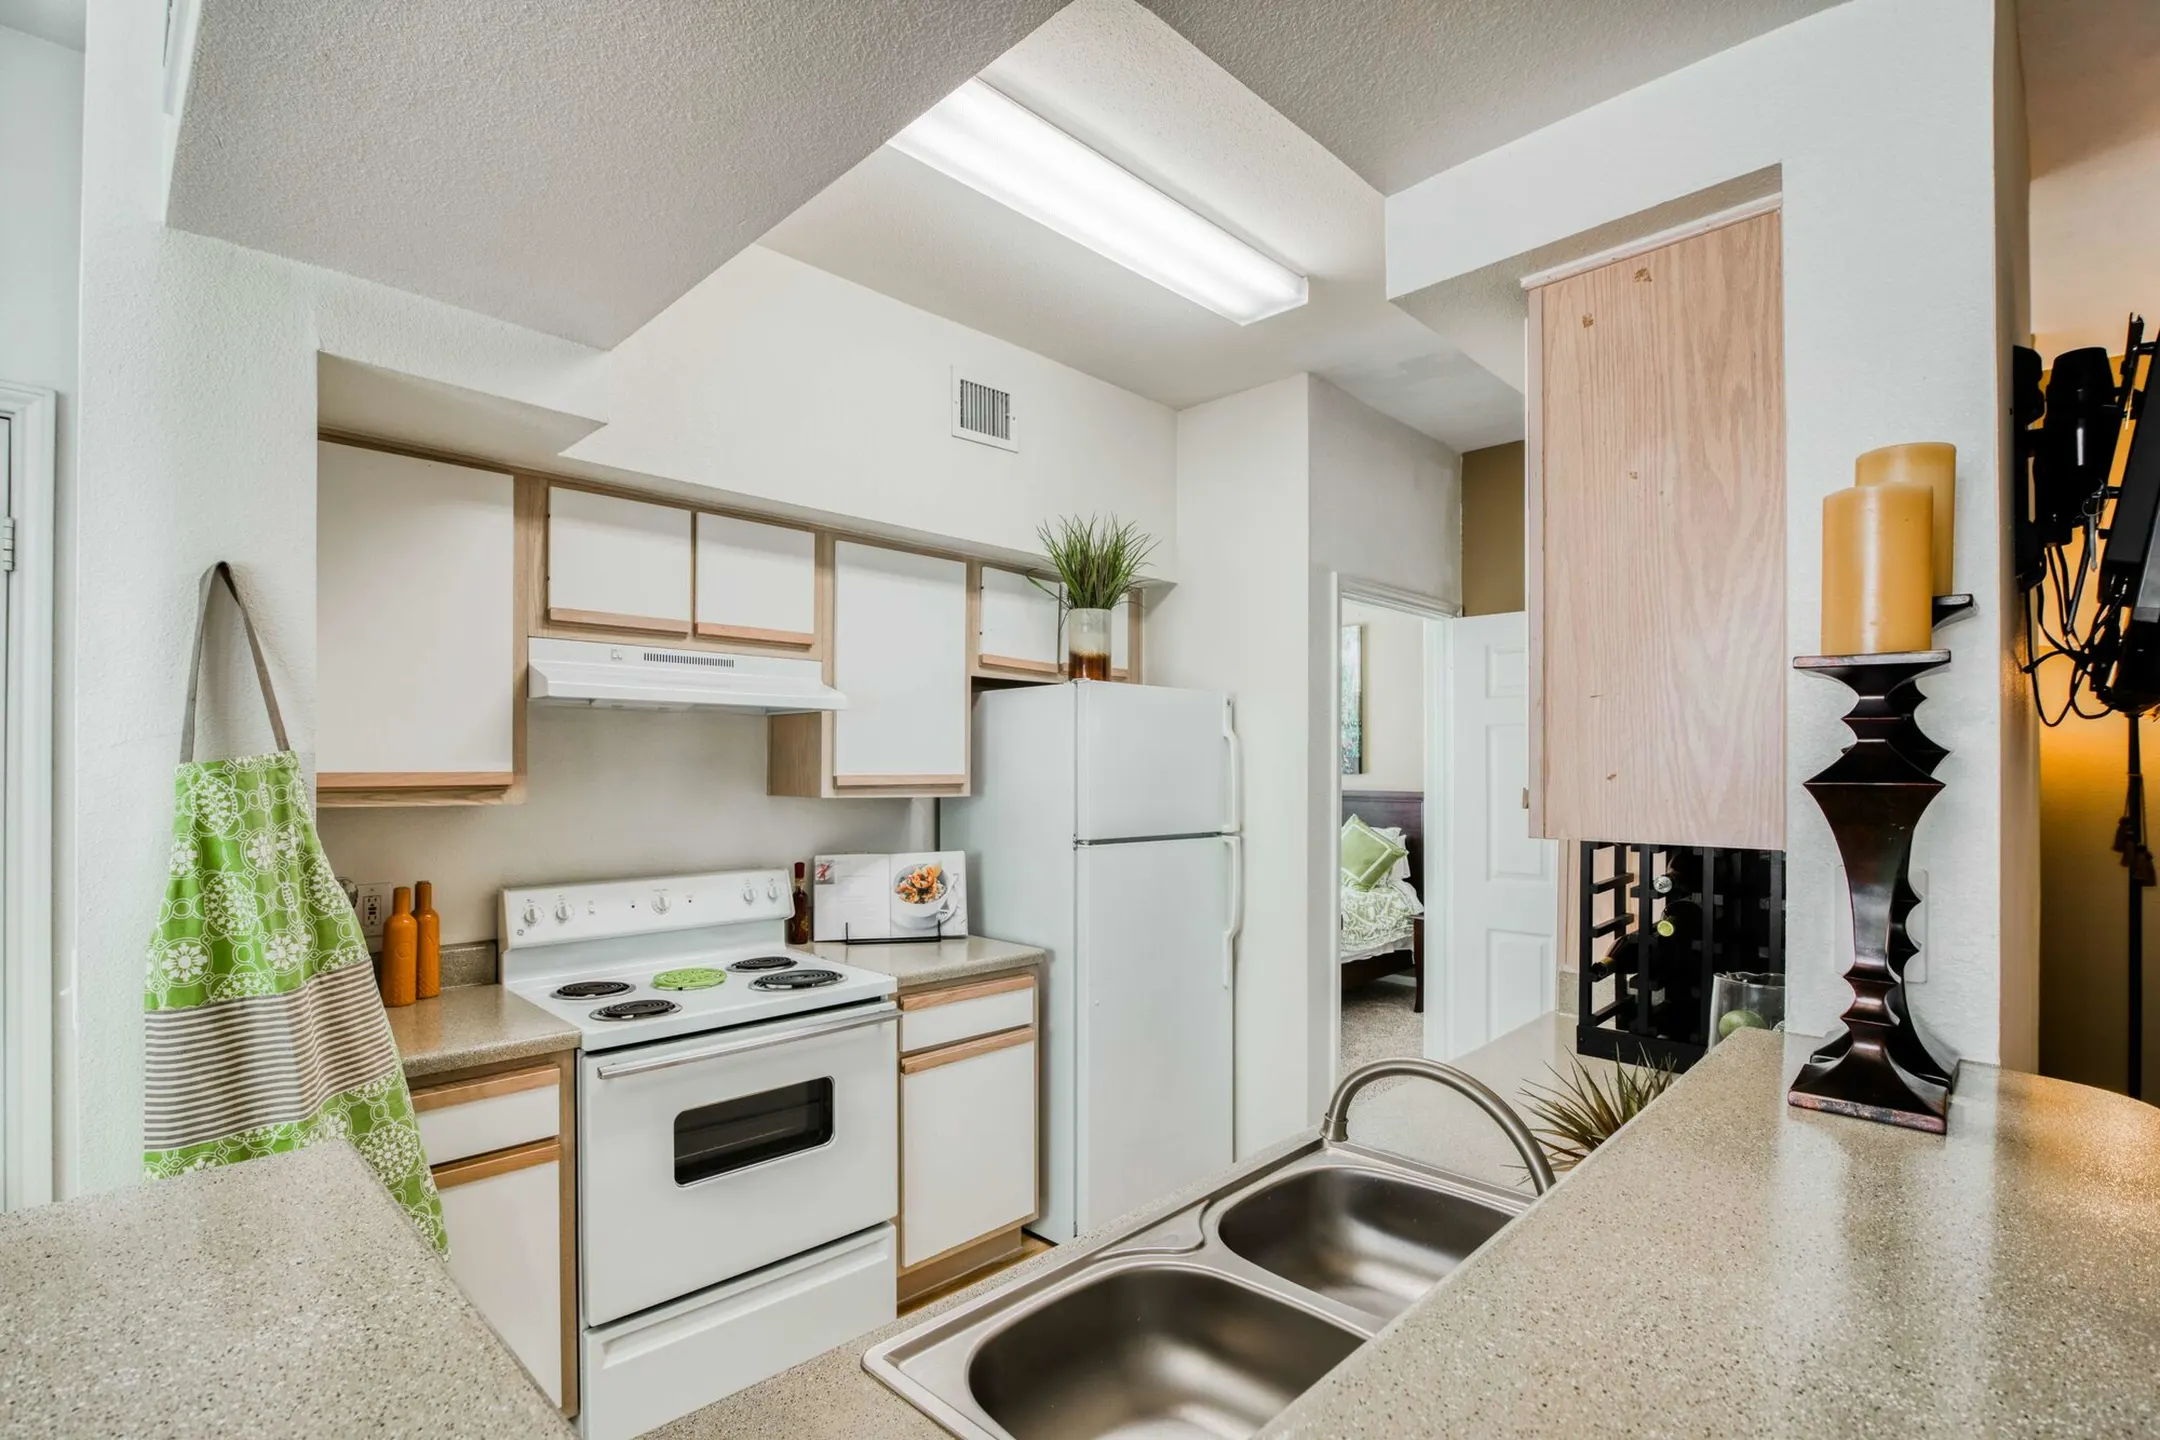 Kitchen - Farnham Park Apartments - Port Arthur, TX